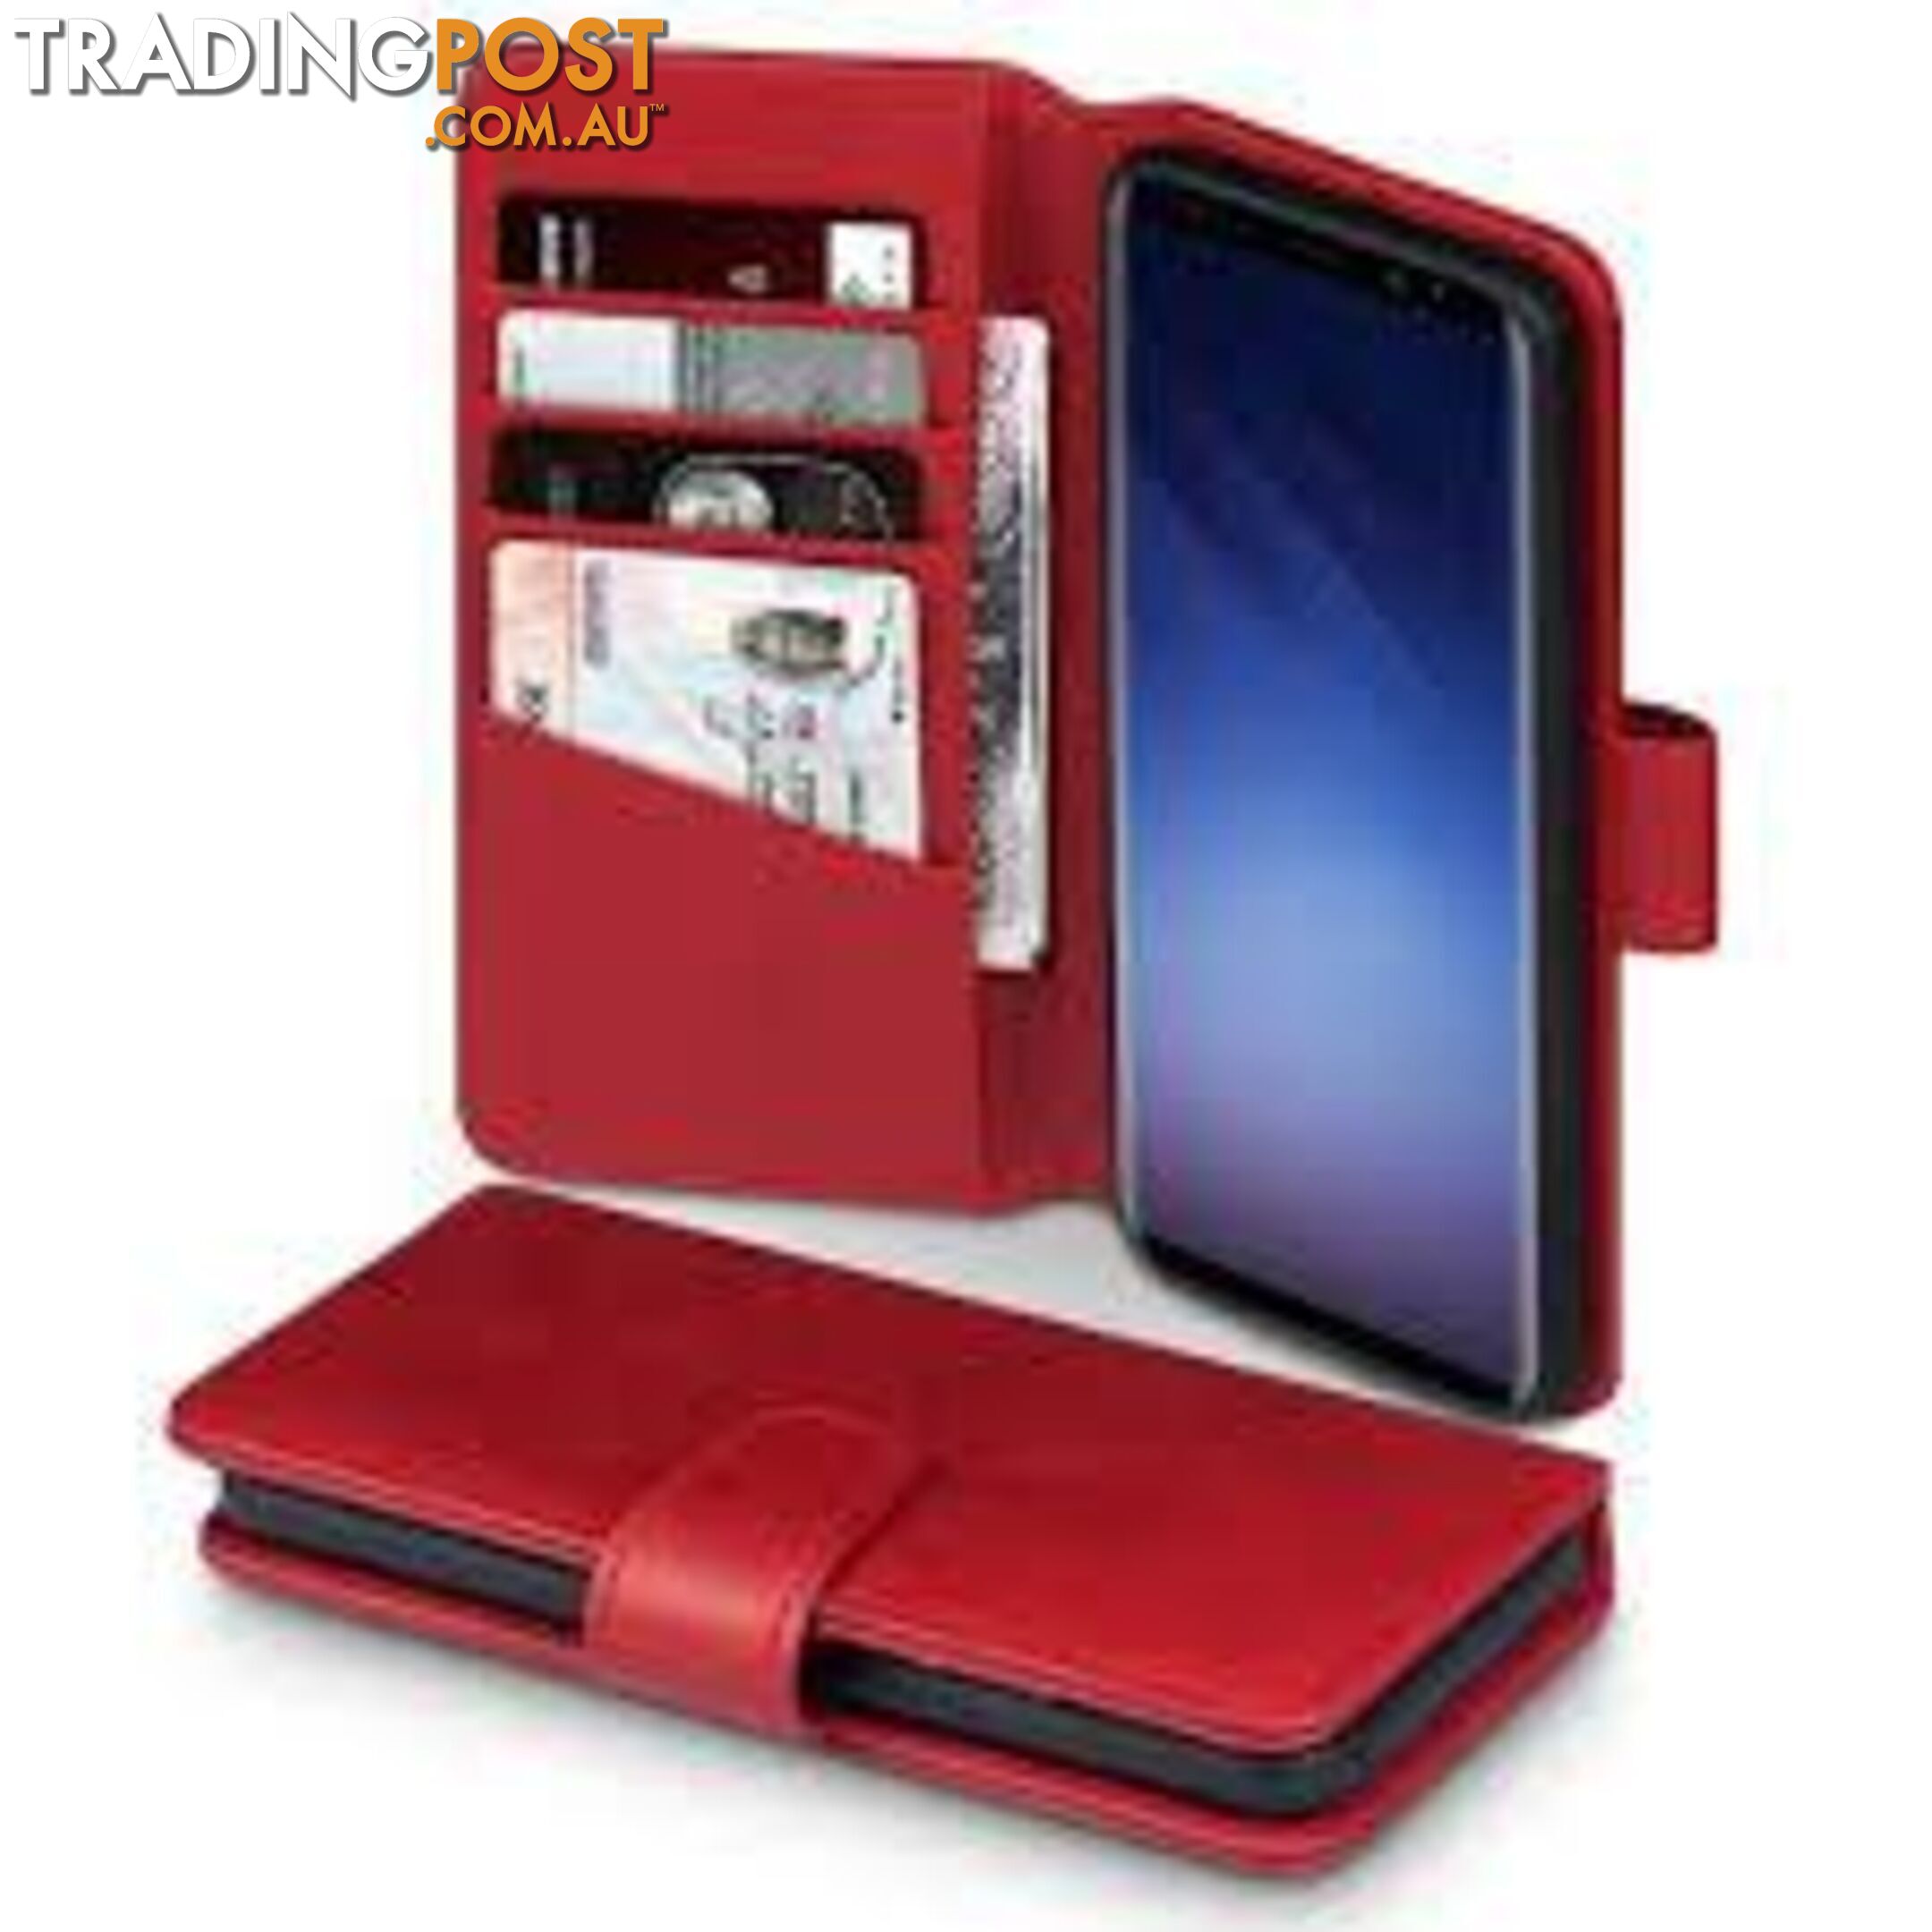 Samsung Galaxy S Series Wallet Style Case - 08E51A - Cases